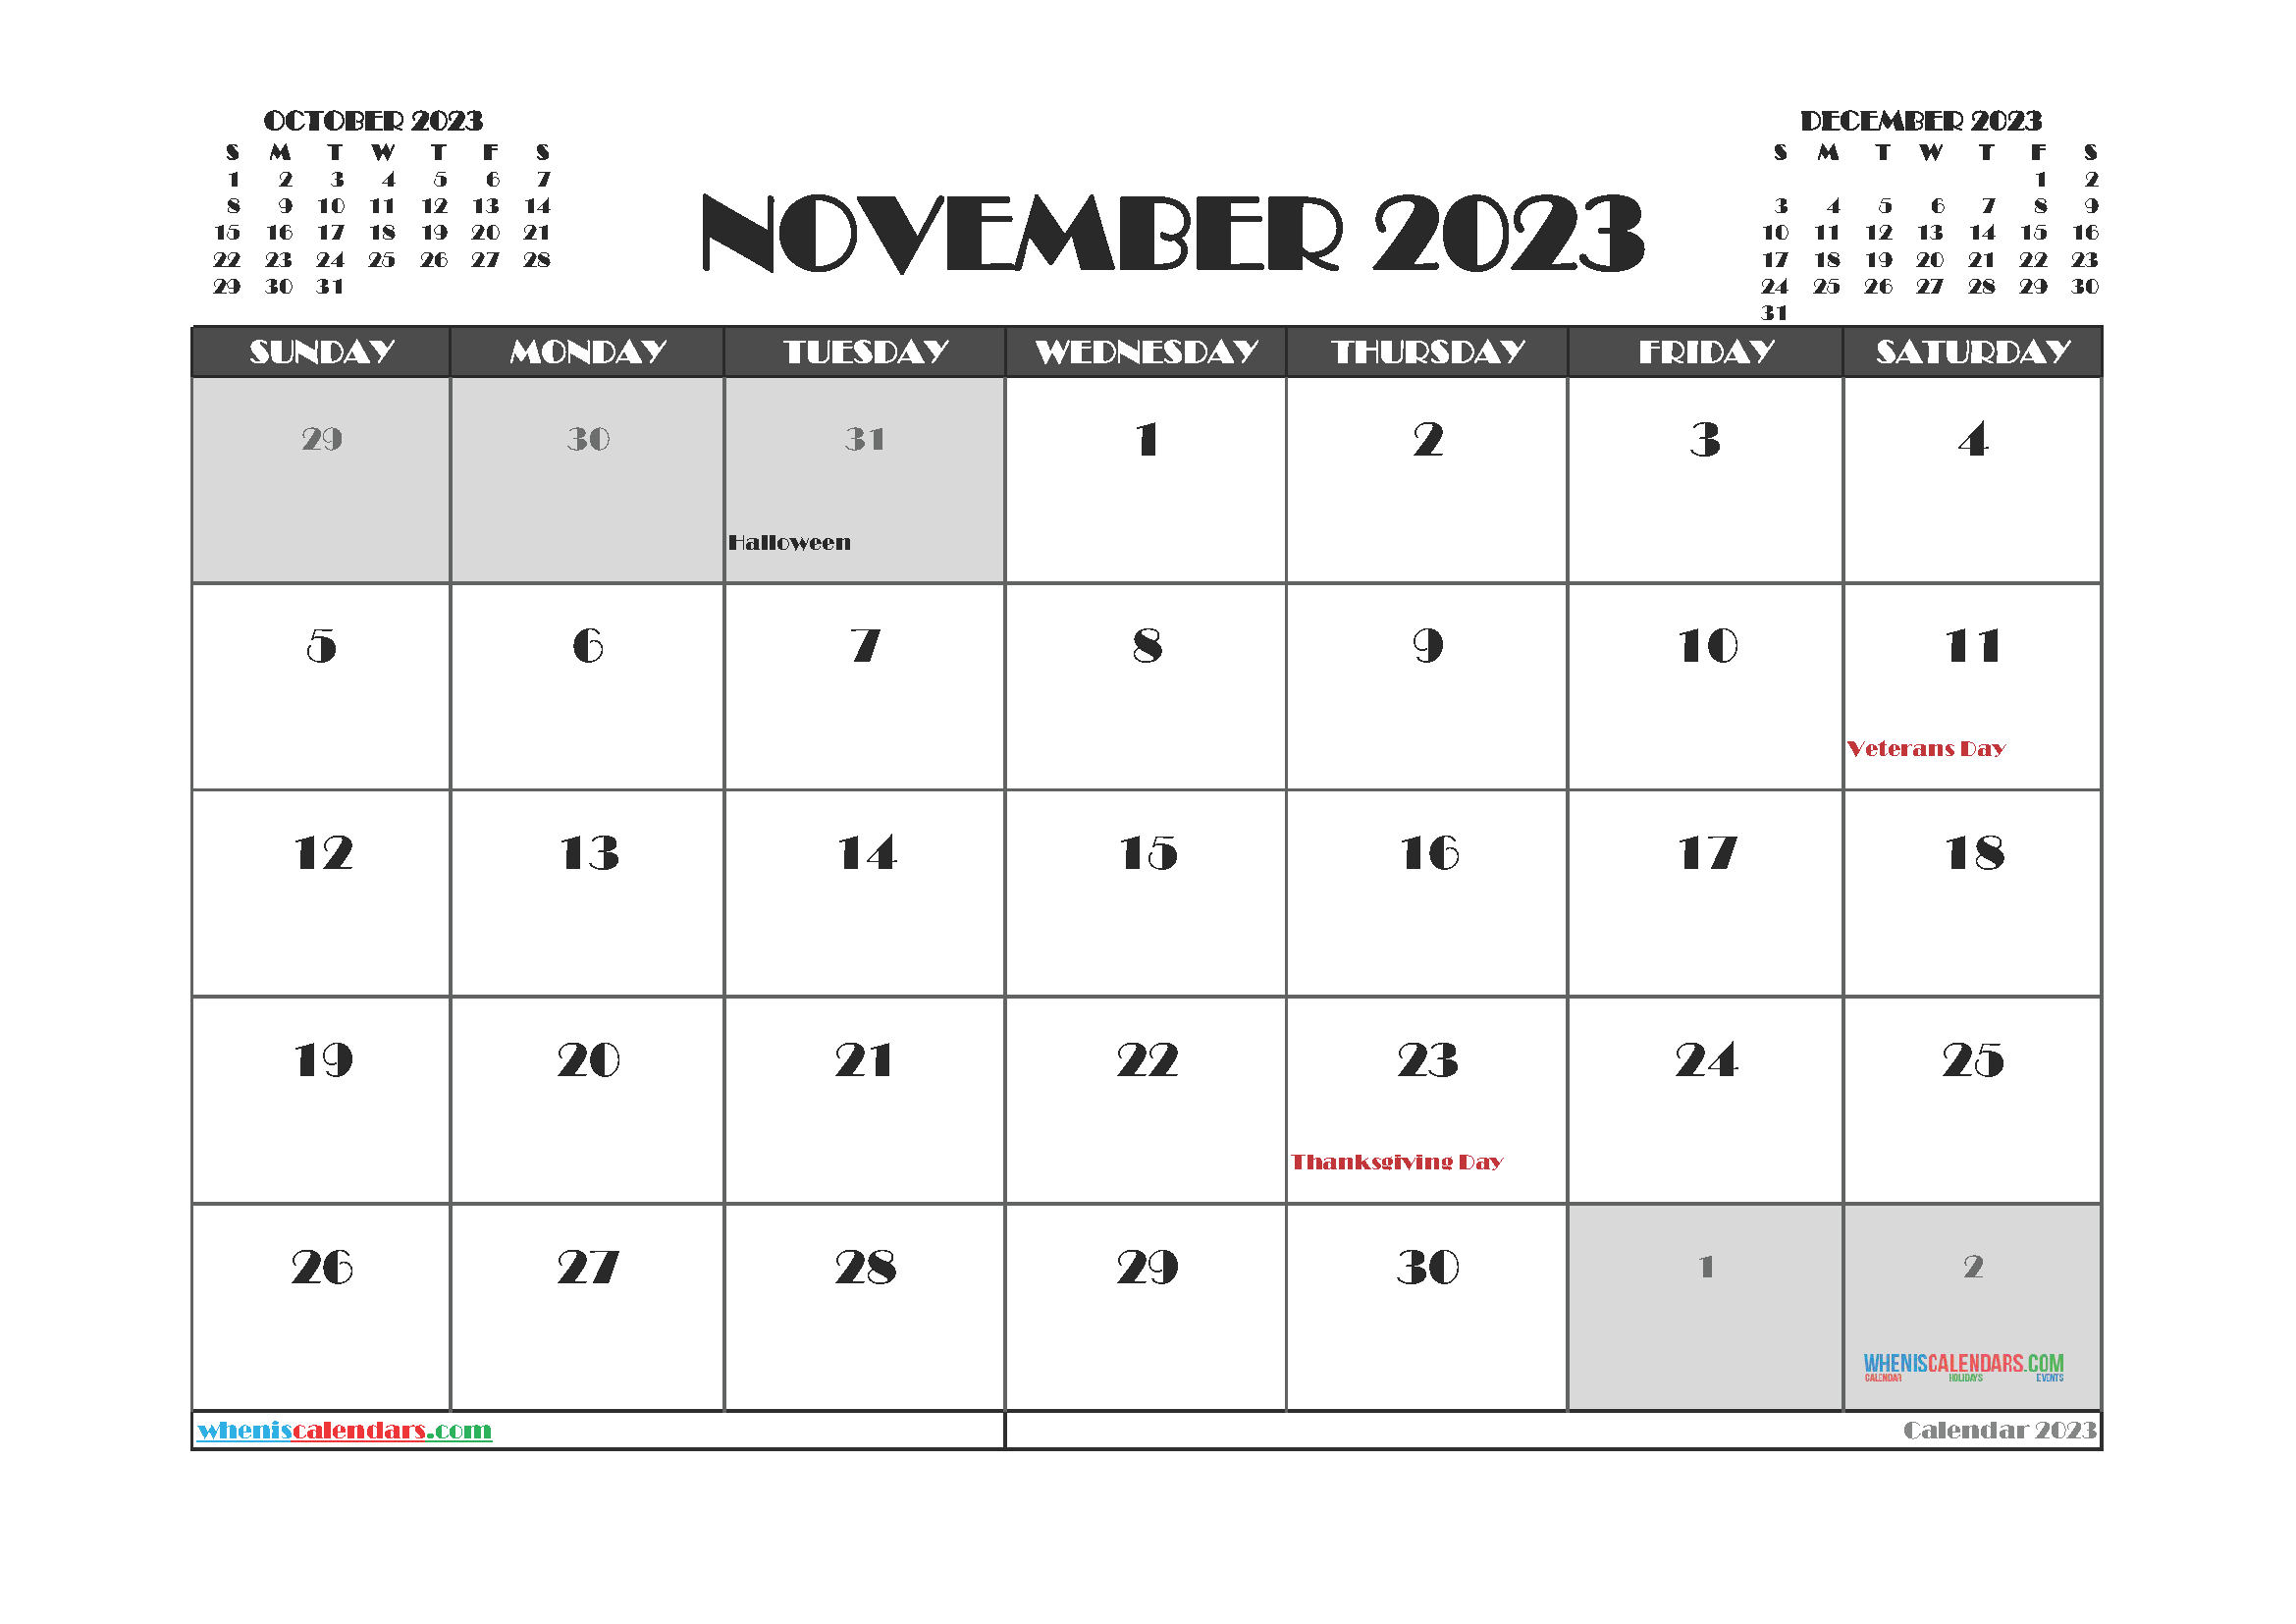 November 2023 Calendar Printable Free